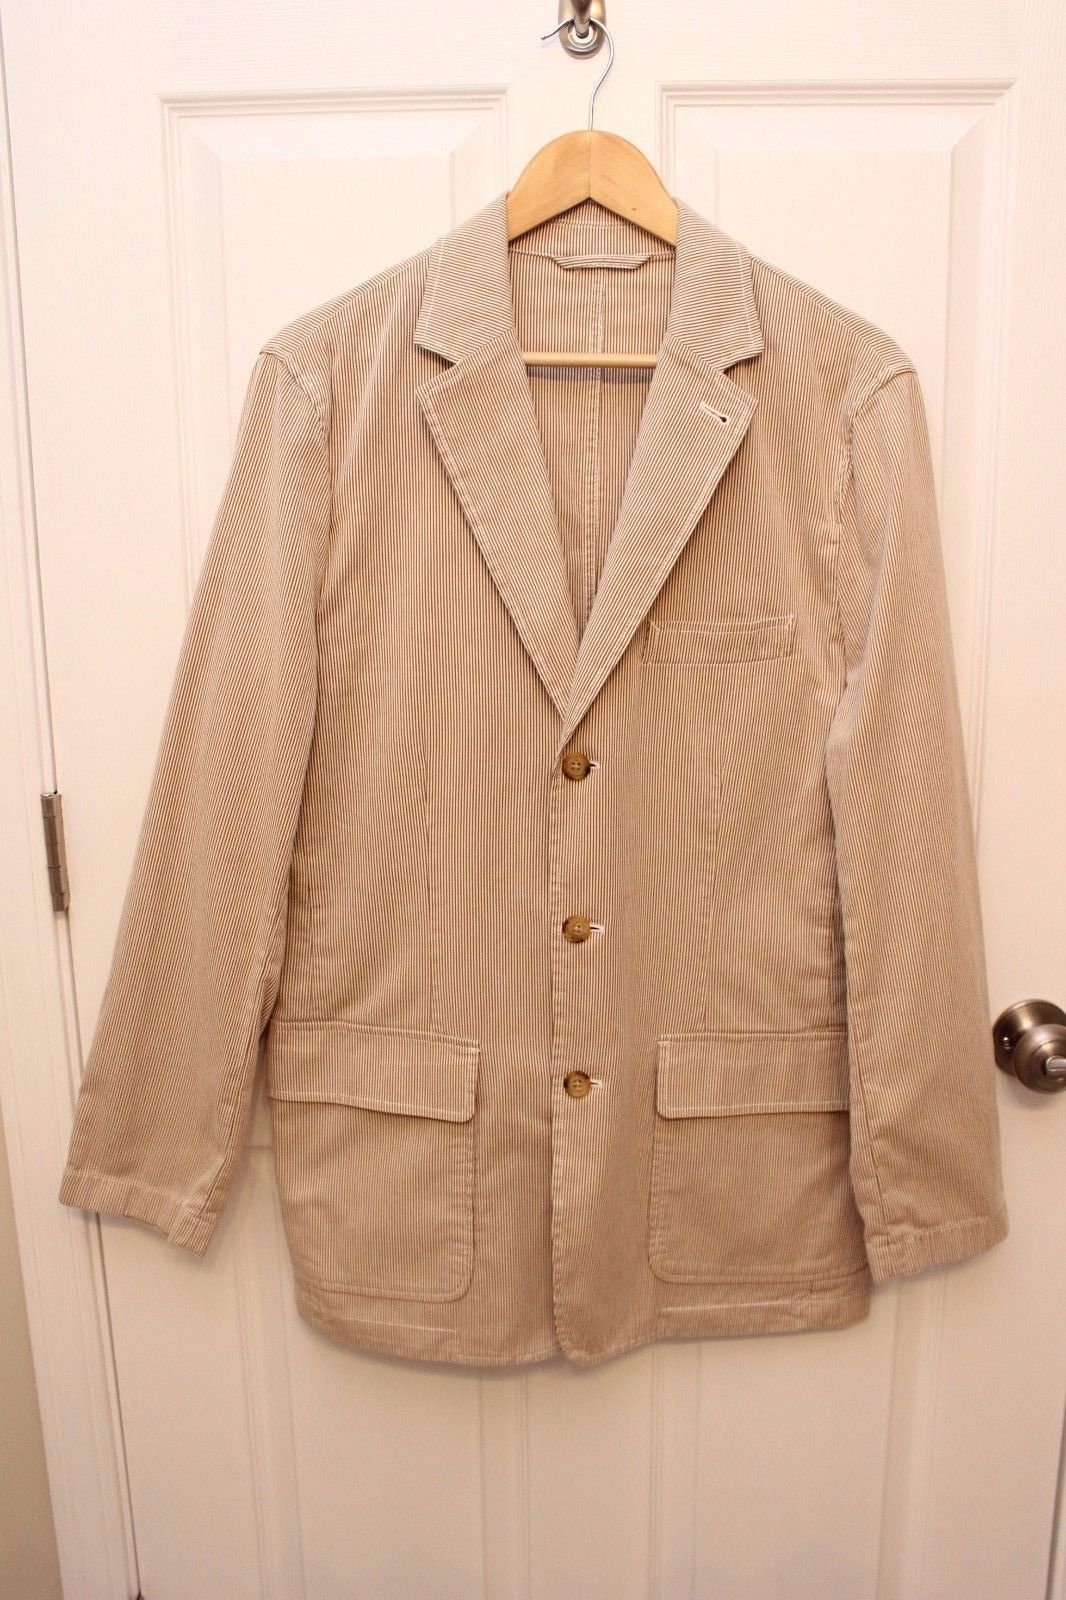 New J.CREW herringbone tweed blazer 42L charcoal gray jacket sport coat 42 Long